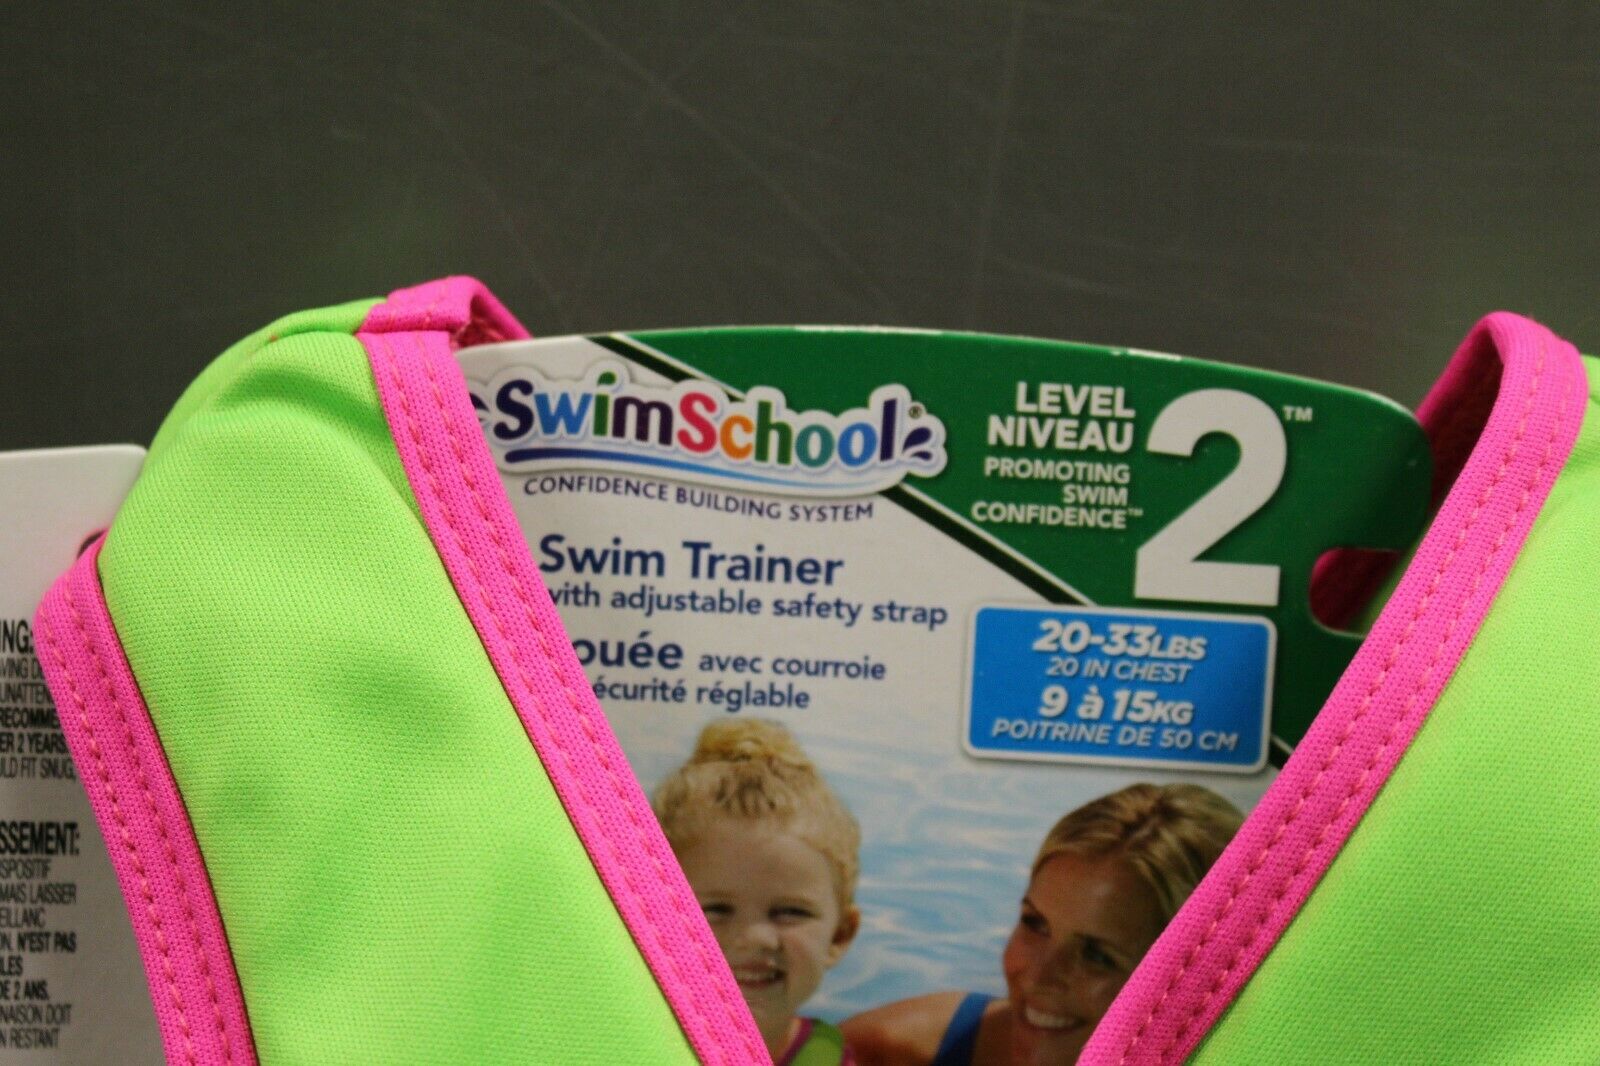 Swim School Girl's Level 2 Swim Trainer, 20-33 lbs, Chest: 20in, WMV11 –  Military Steals and Surplus